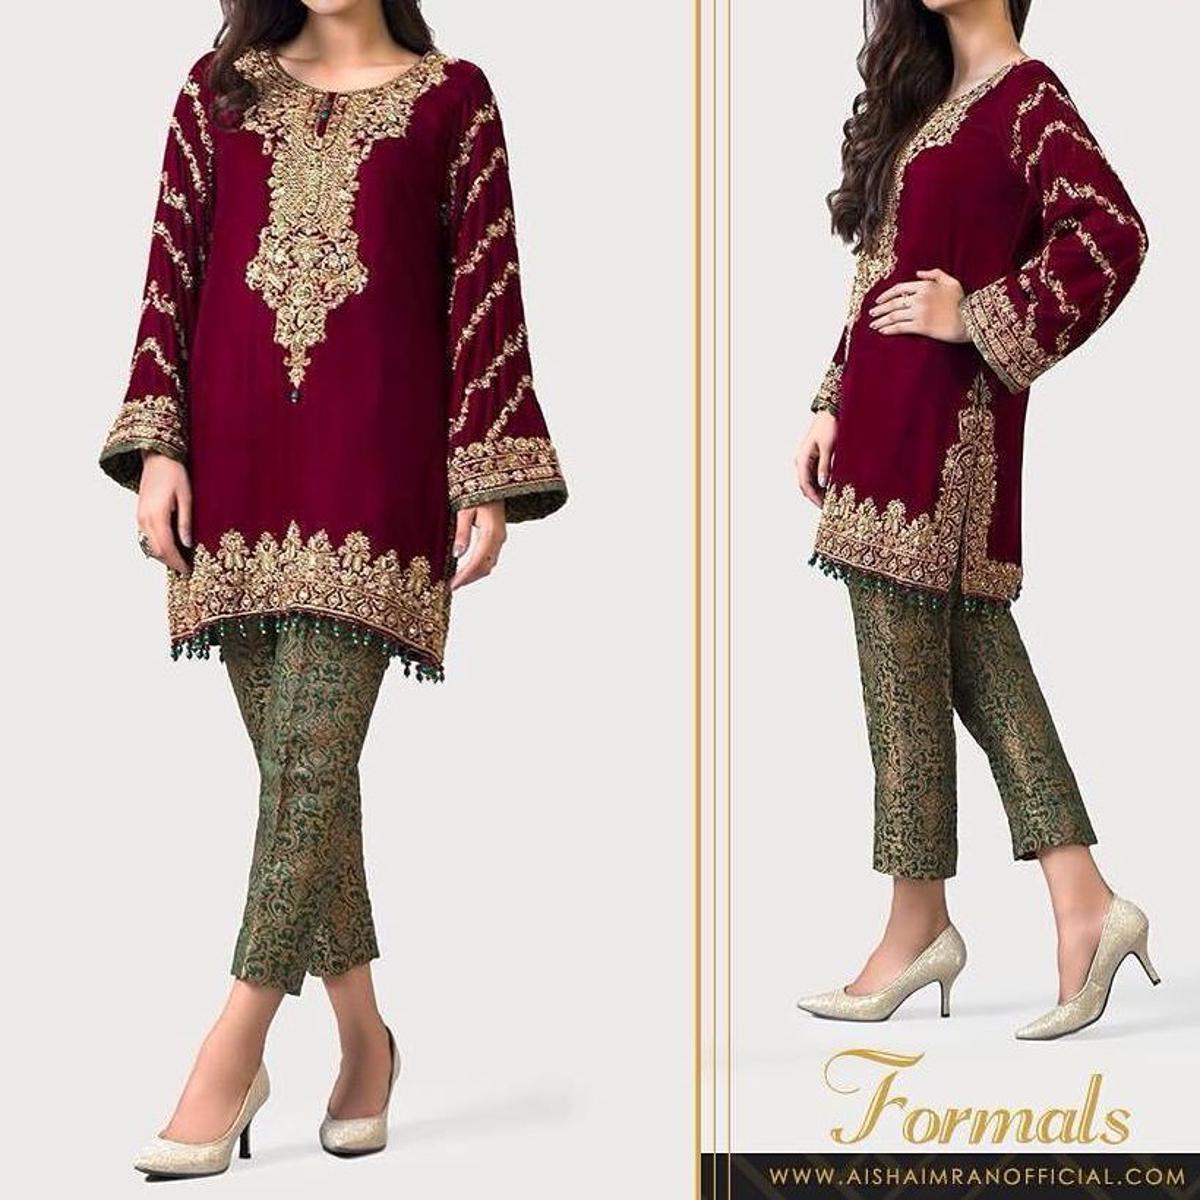 Gul Ahmed Fancy Winter Velvet Dresses  Shawls Collection  designs 11   StylesGapcom